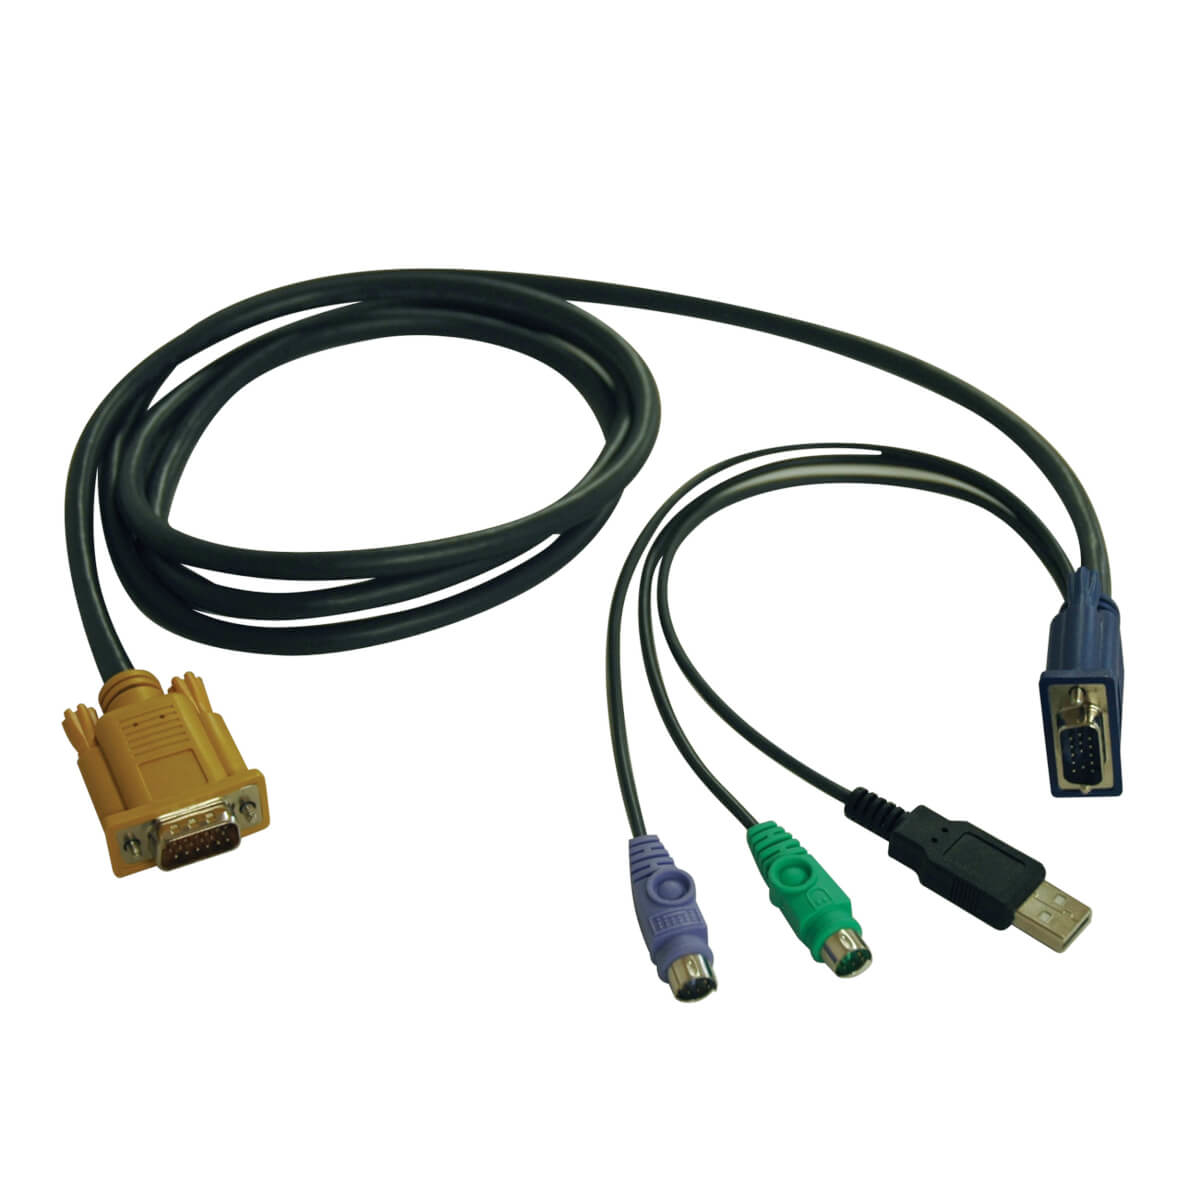 Tripp Lite P778-010 Cable Combinado USB/PS2 para KVM NetDirector B020-U08/U16, 3.05 m [10 pies]